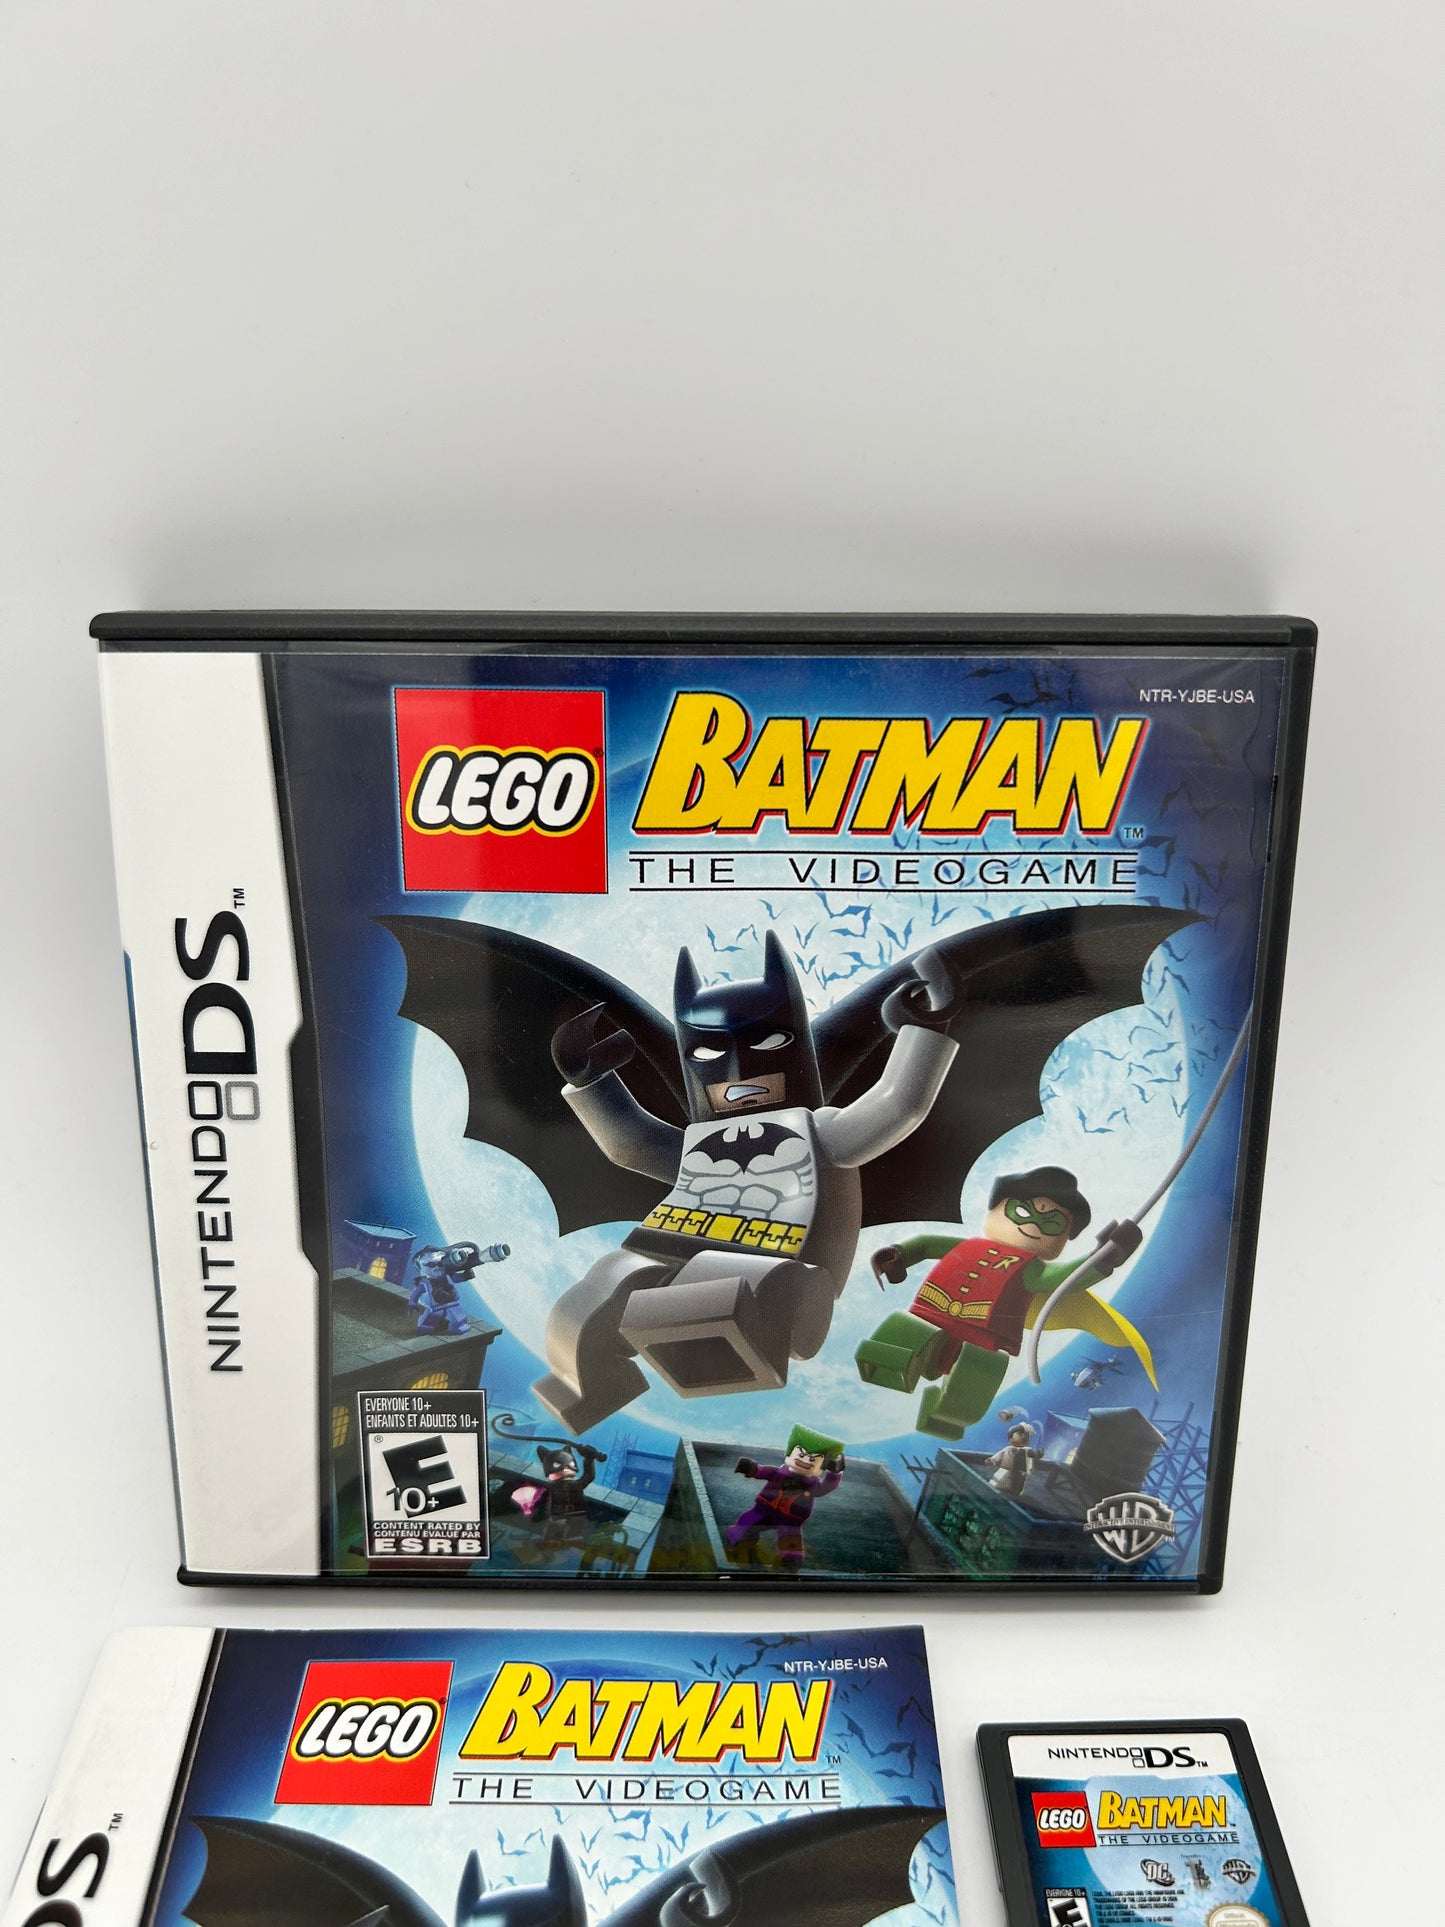 NiNTENDO DS | LEGO BATMAN THE ViDEOGAME